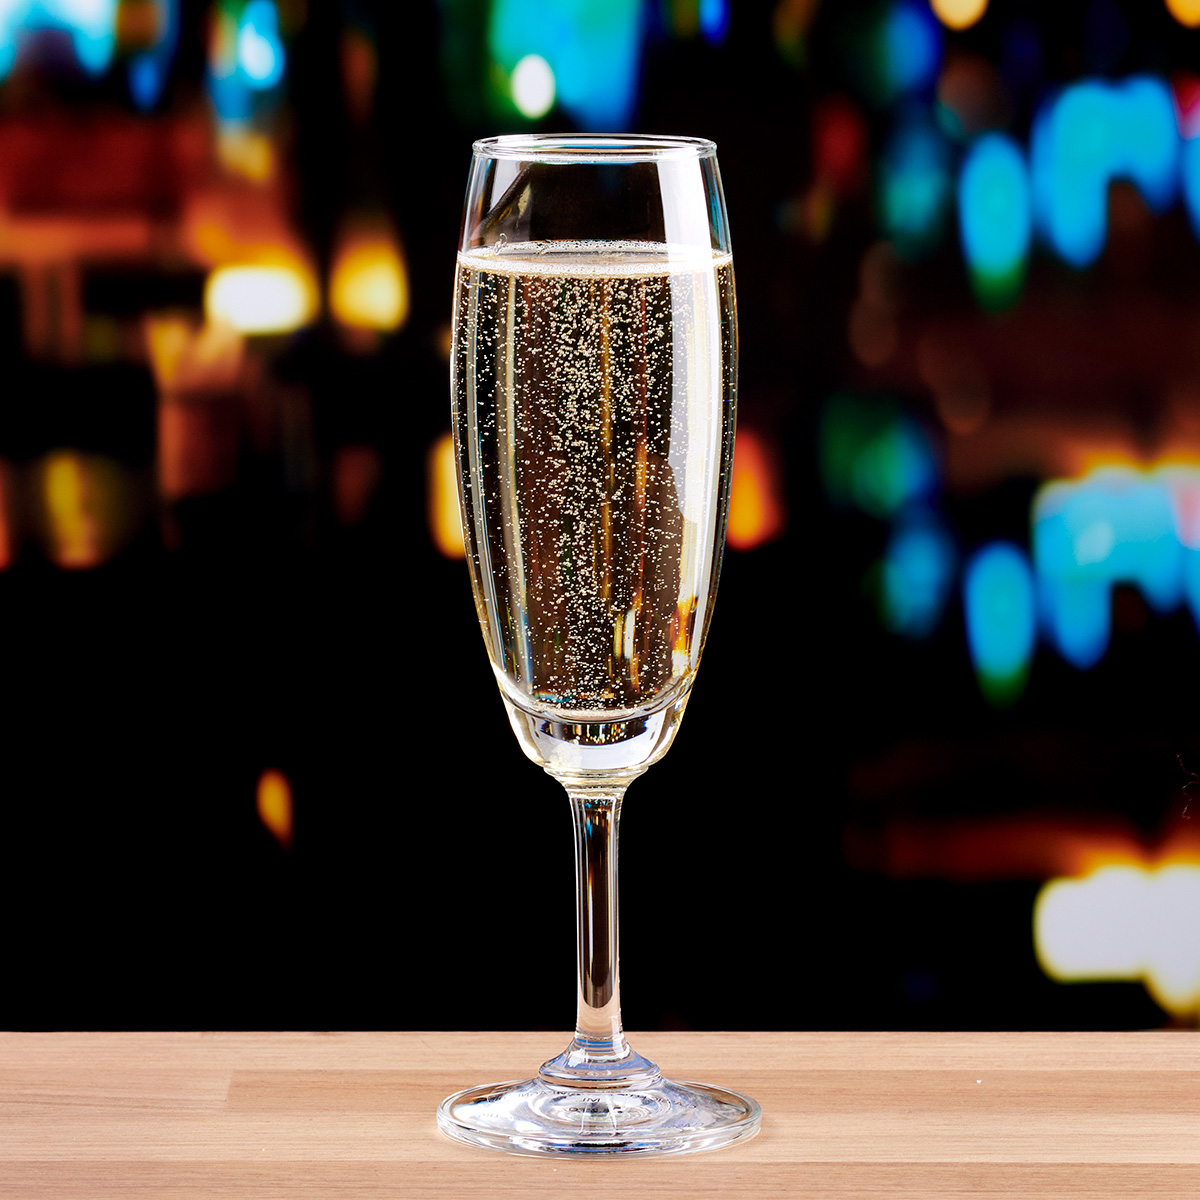 Classic Champagne Flute, 6.5 oz. (185 ml.) - Anchor Hocking  FoodserviceAnchor Hocking Foodservice